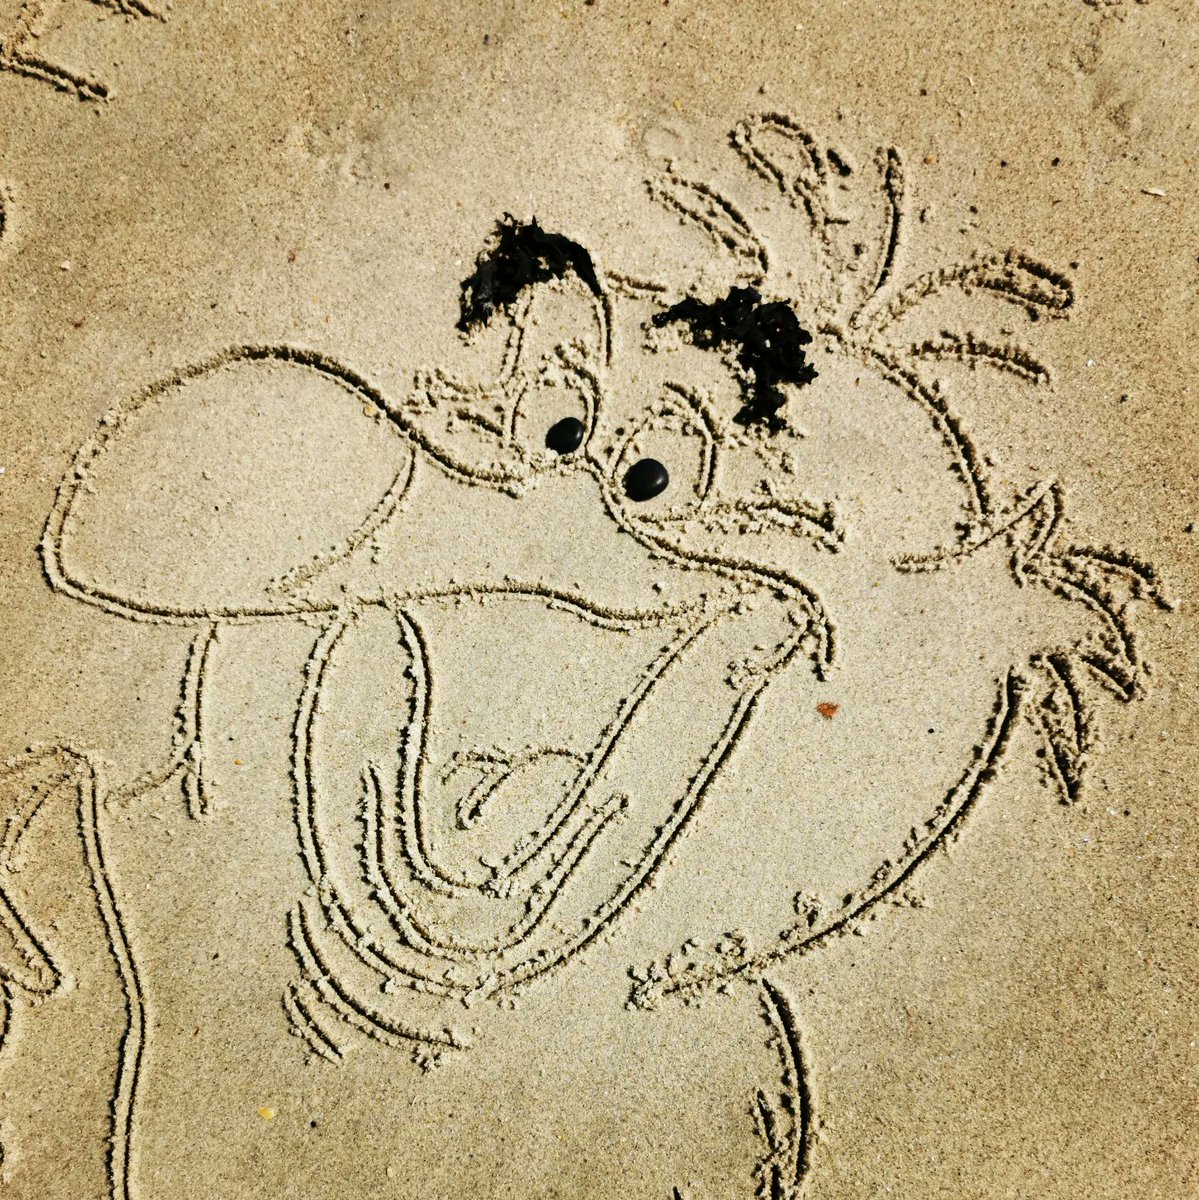 Scuttle - The Little Mermaid 🧜‍♀️
Make it up 😜 #Scuttle #seagull #TheLittleMermaid #buddyHackett #HumanStuff @disney #Mermaid
💛 #Morein2023 #Covid2022 #Lockdown2021 #morale #VitaminSea 🌊 #DuneToons #Lockdown2020 #comics #cartoons ✍️ #SandBanksy #shorelinesally Character No.1876